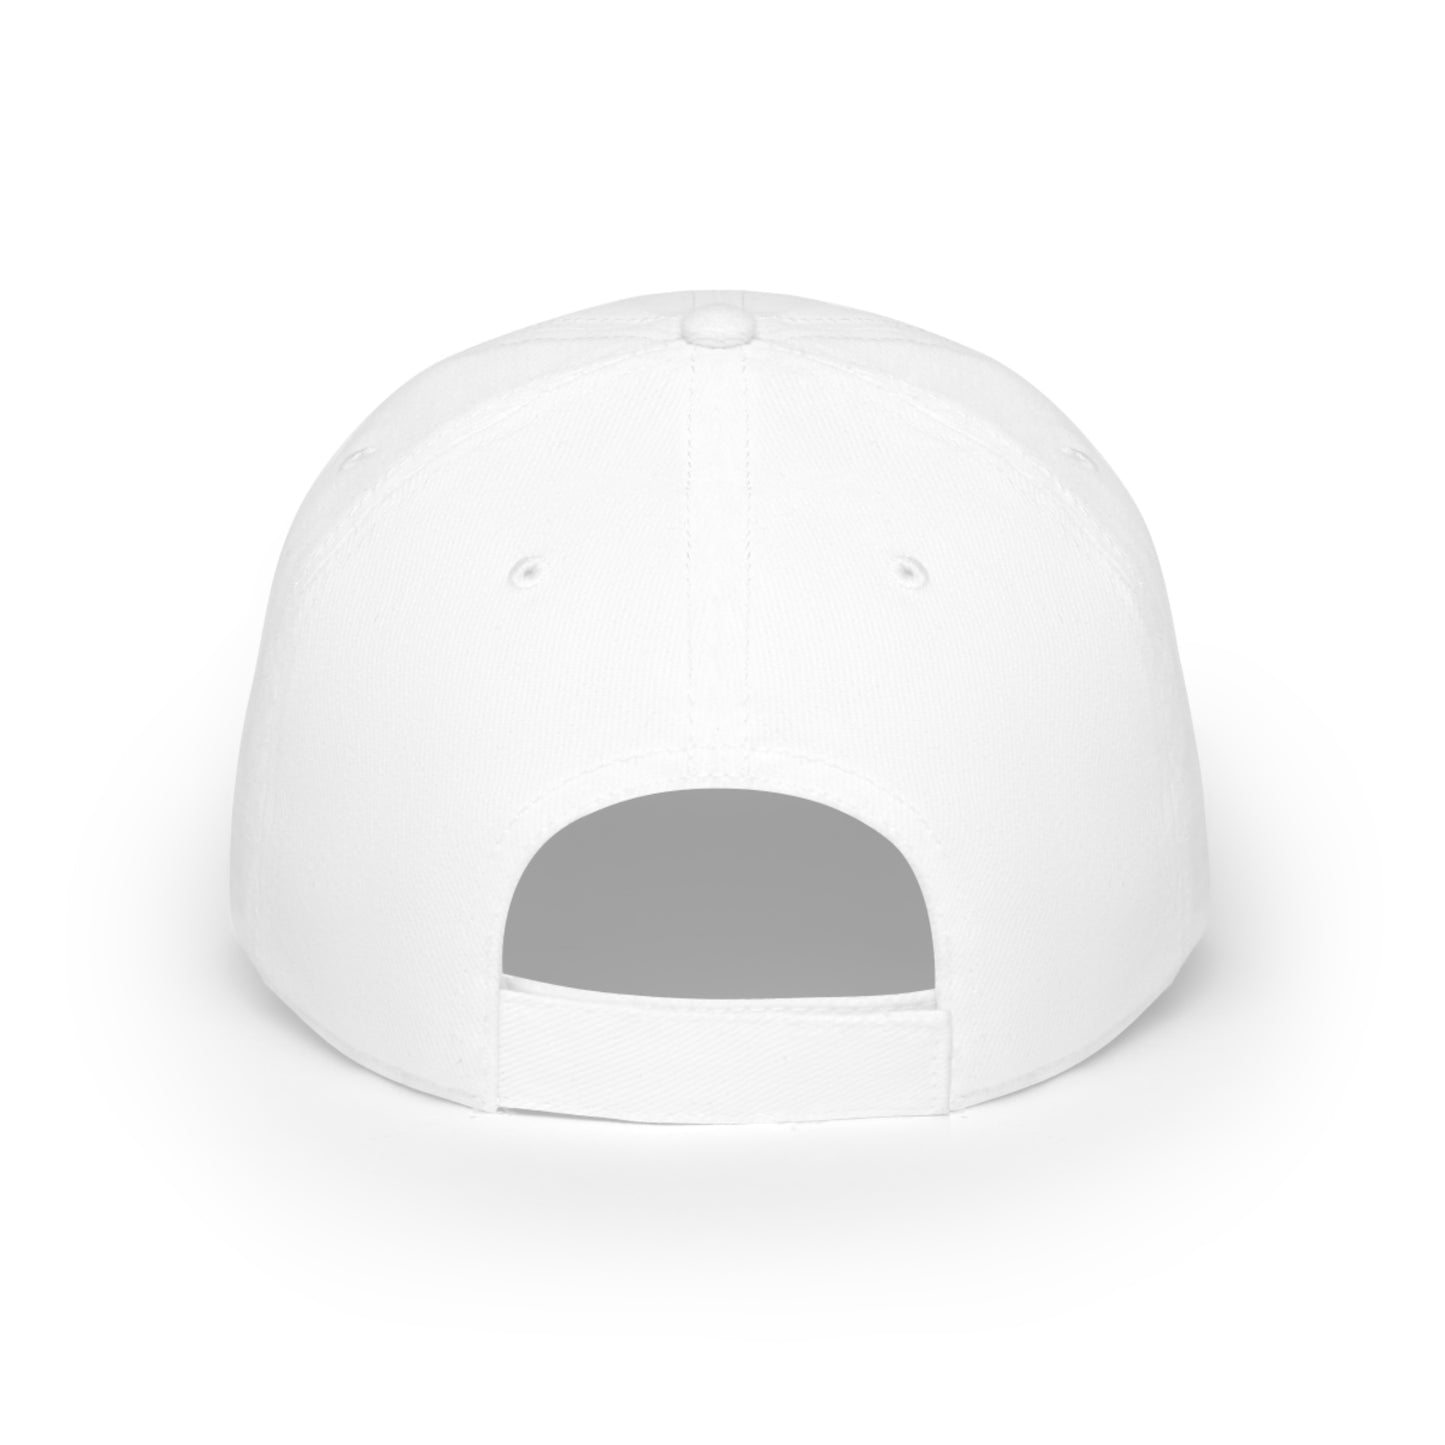 My Baseball Hat: Low Profile Baseball Cap